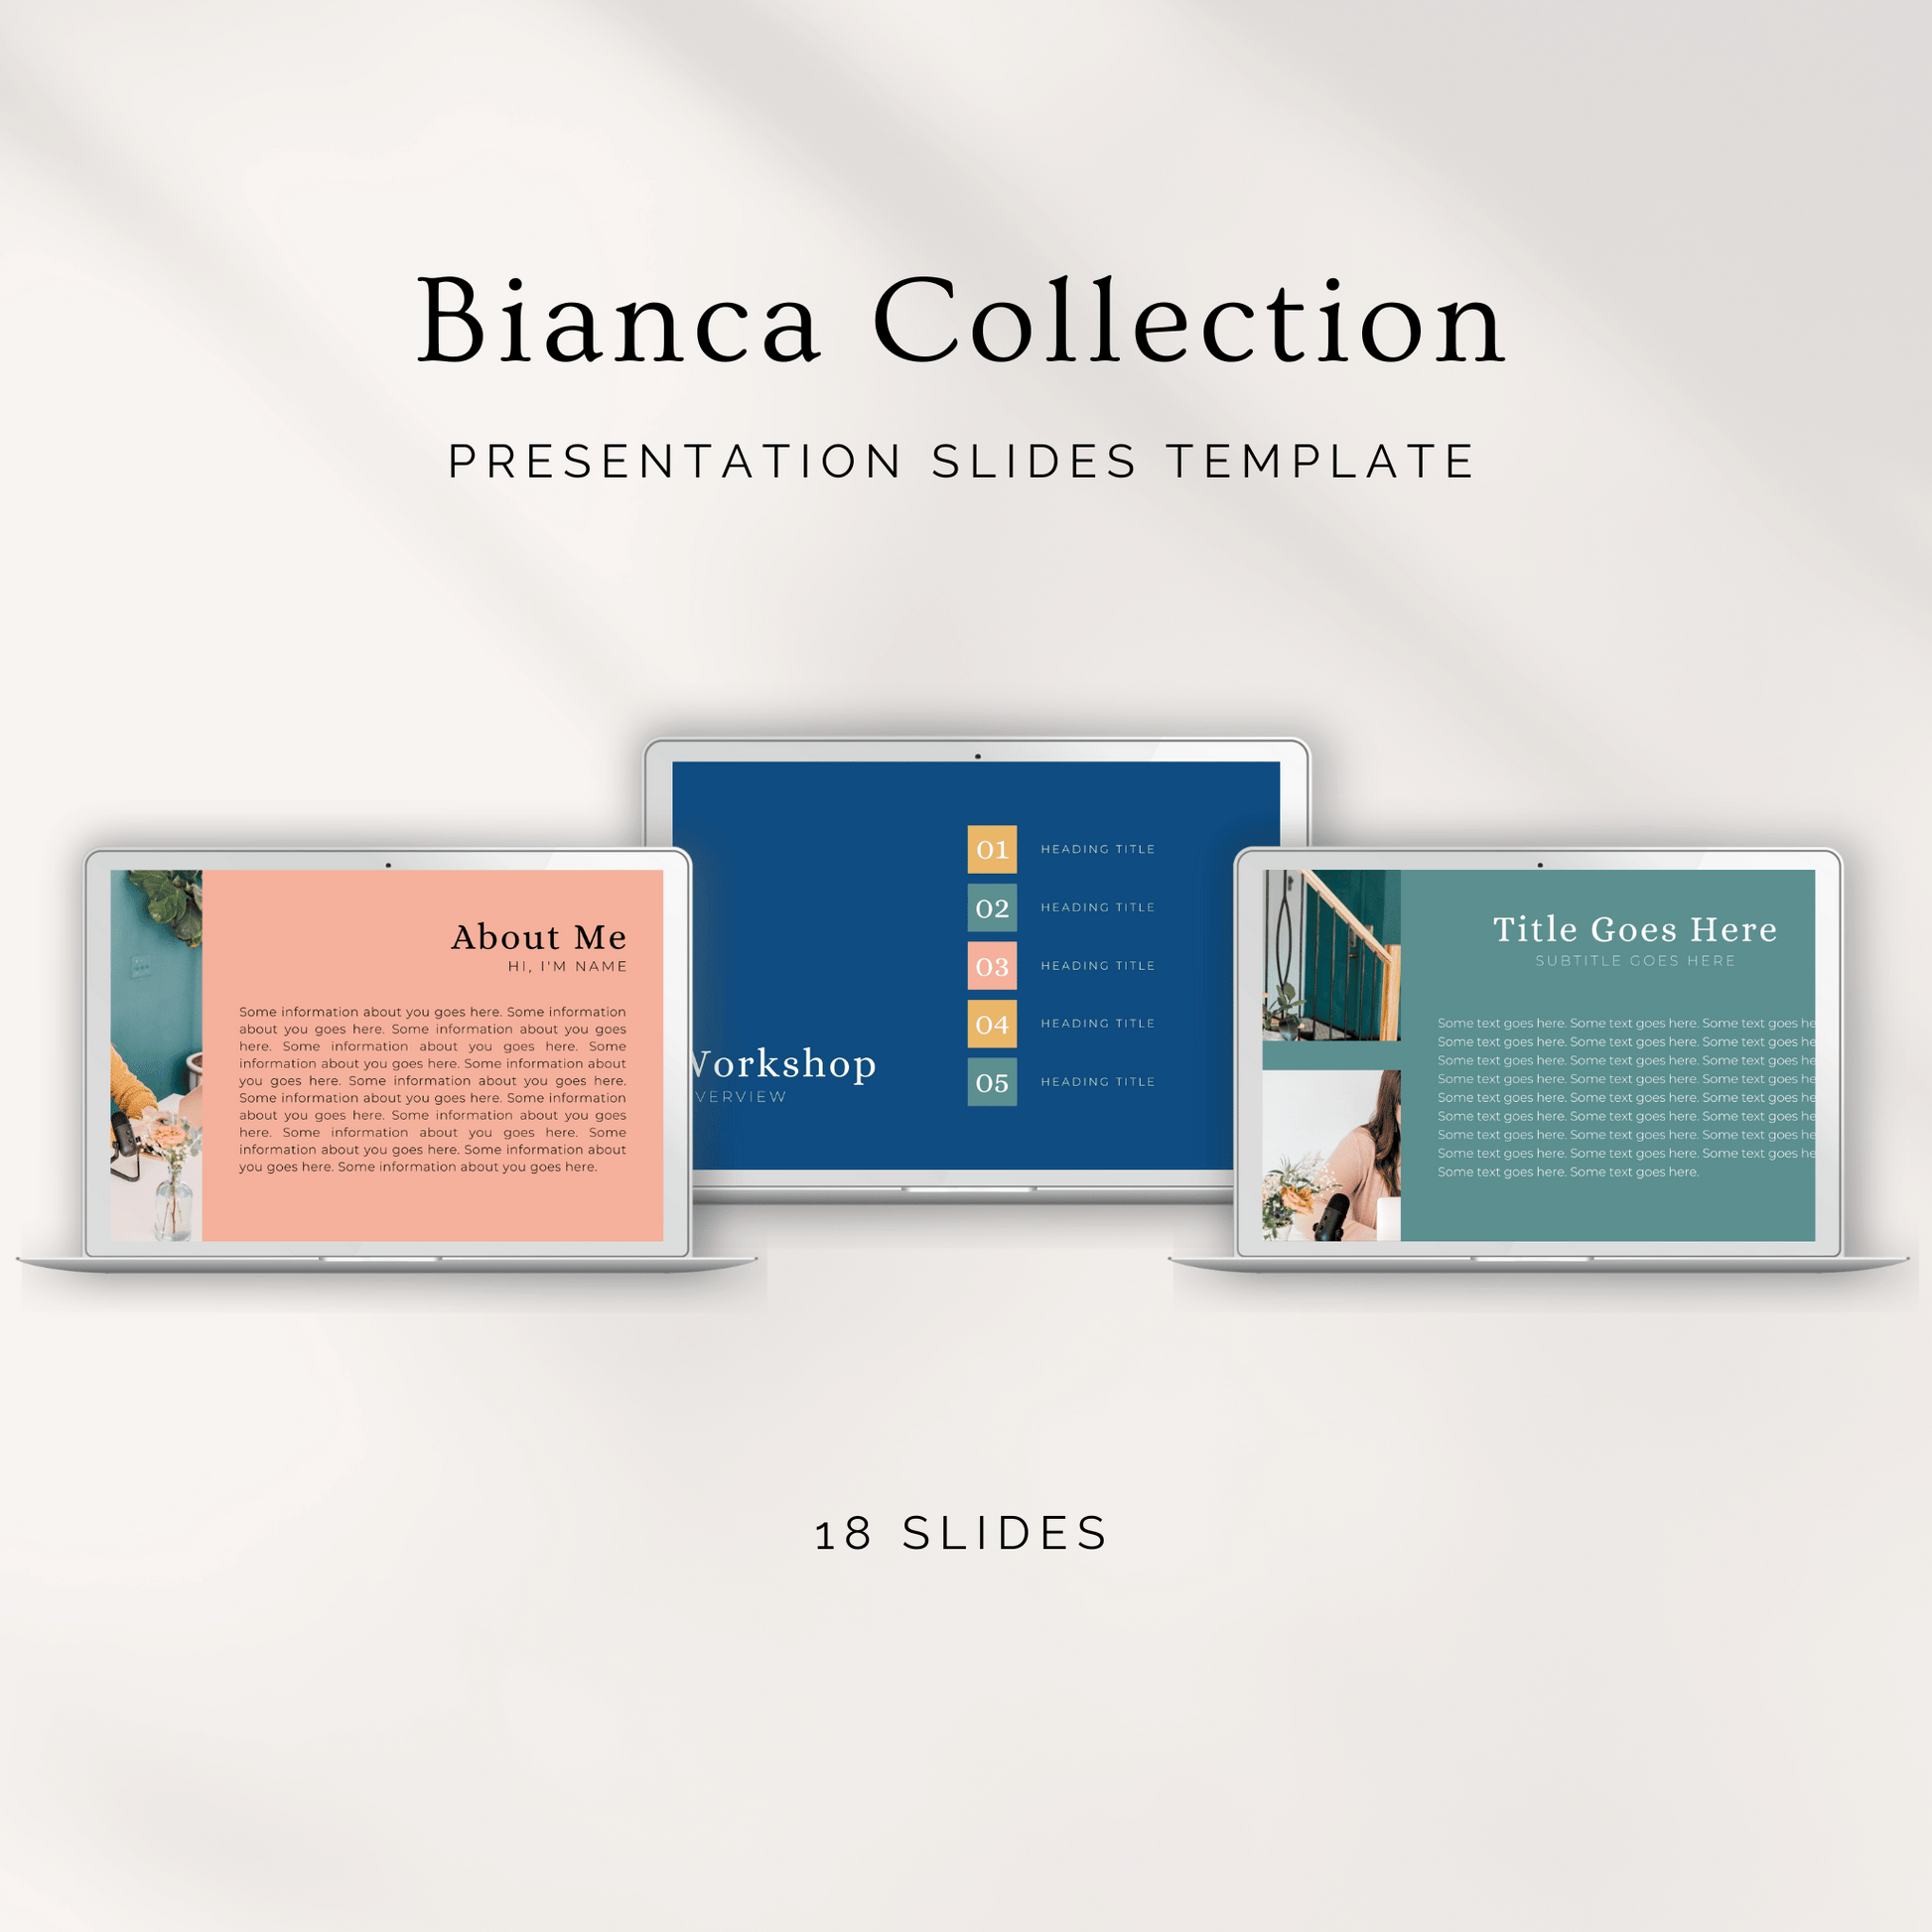 Bianca Collection Canva Presentation Slide Deck template for the color loving female entrepreneur